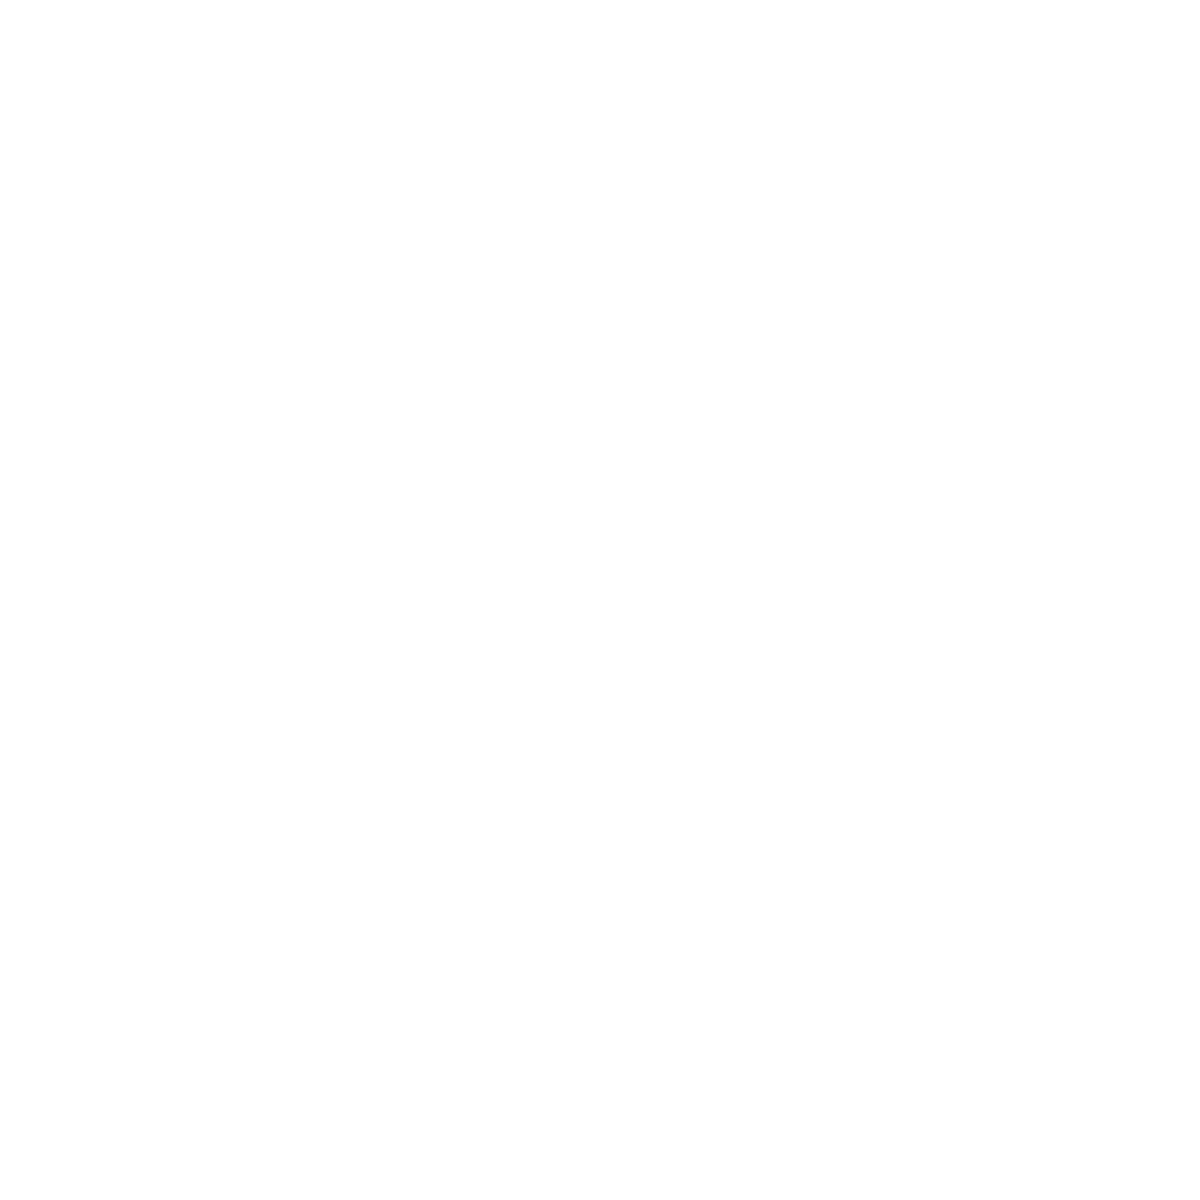 LA county logo 